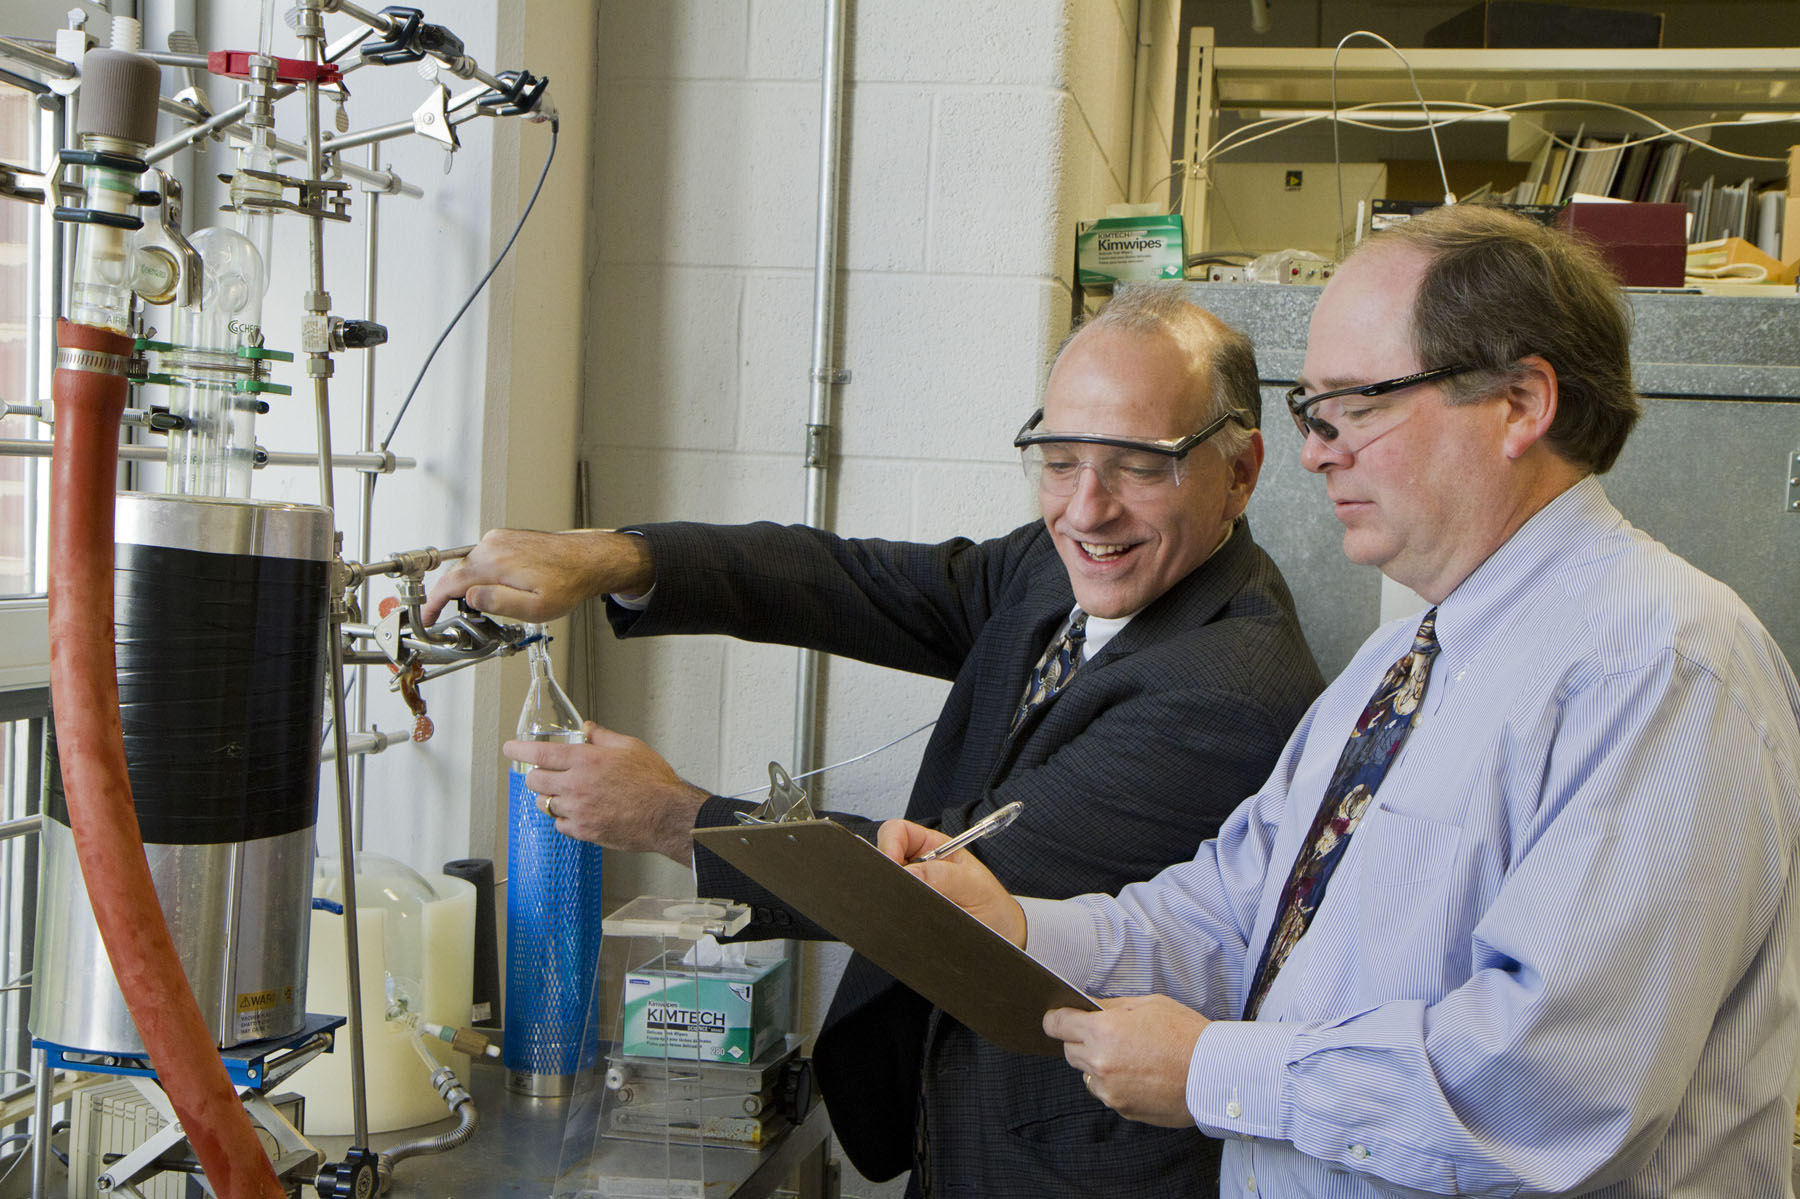 Matthew Neurock and Robert J. Davis work on a machine together in the lab